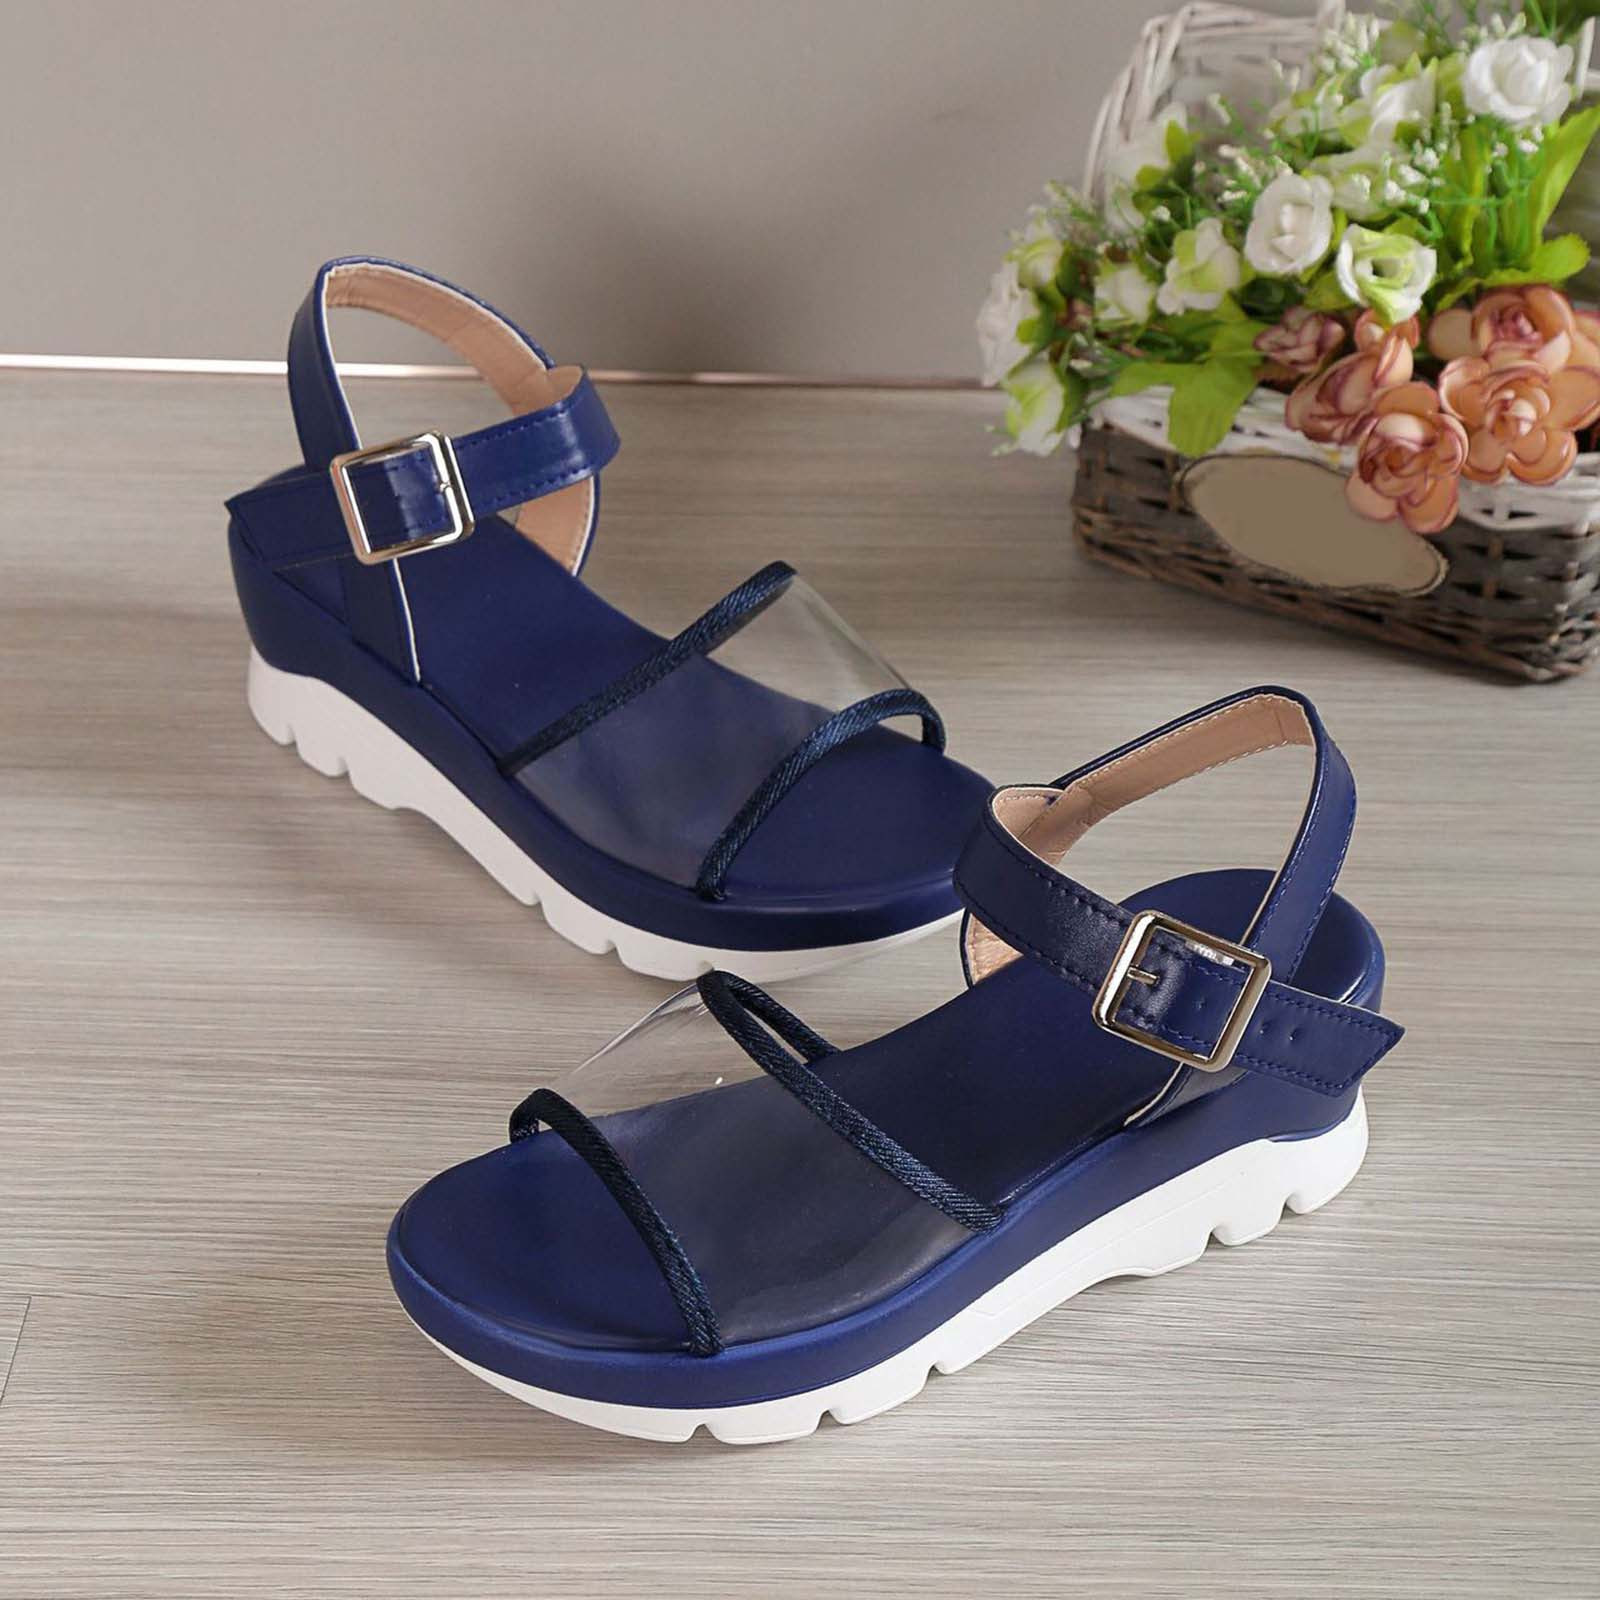 AnuYalue Platform Sandals for Women, Comfortable Open Toe Wedge Sandals ...